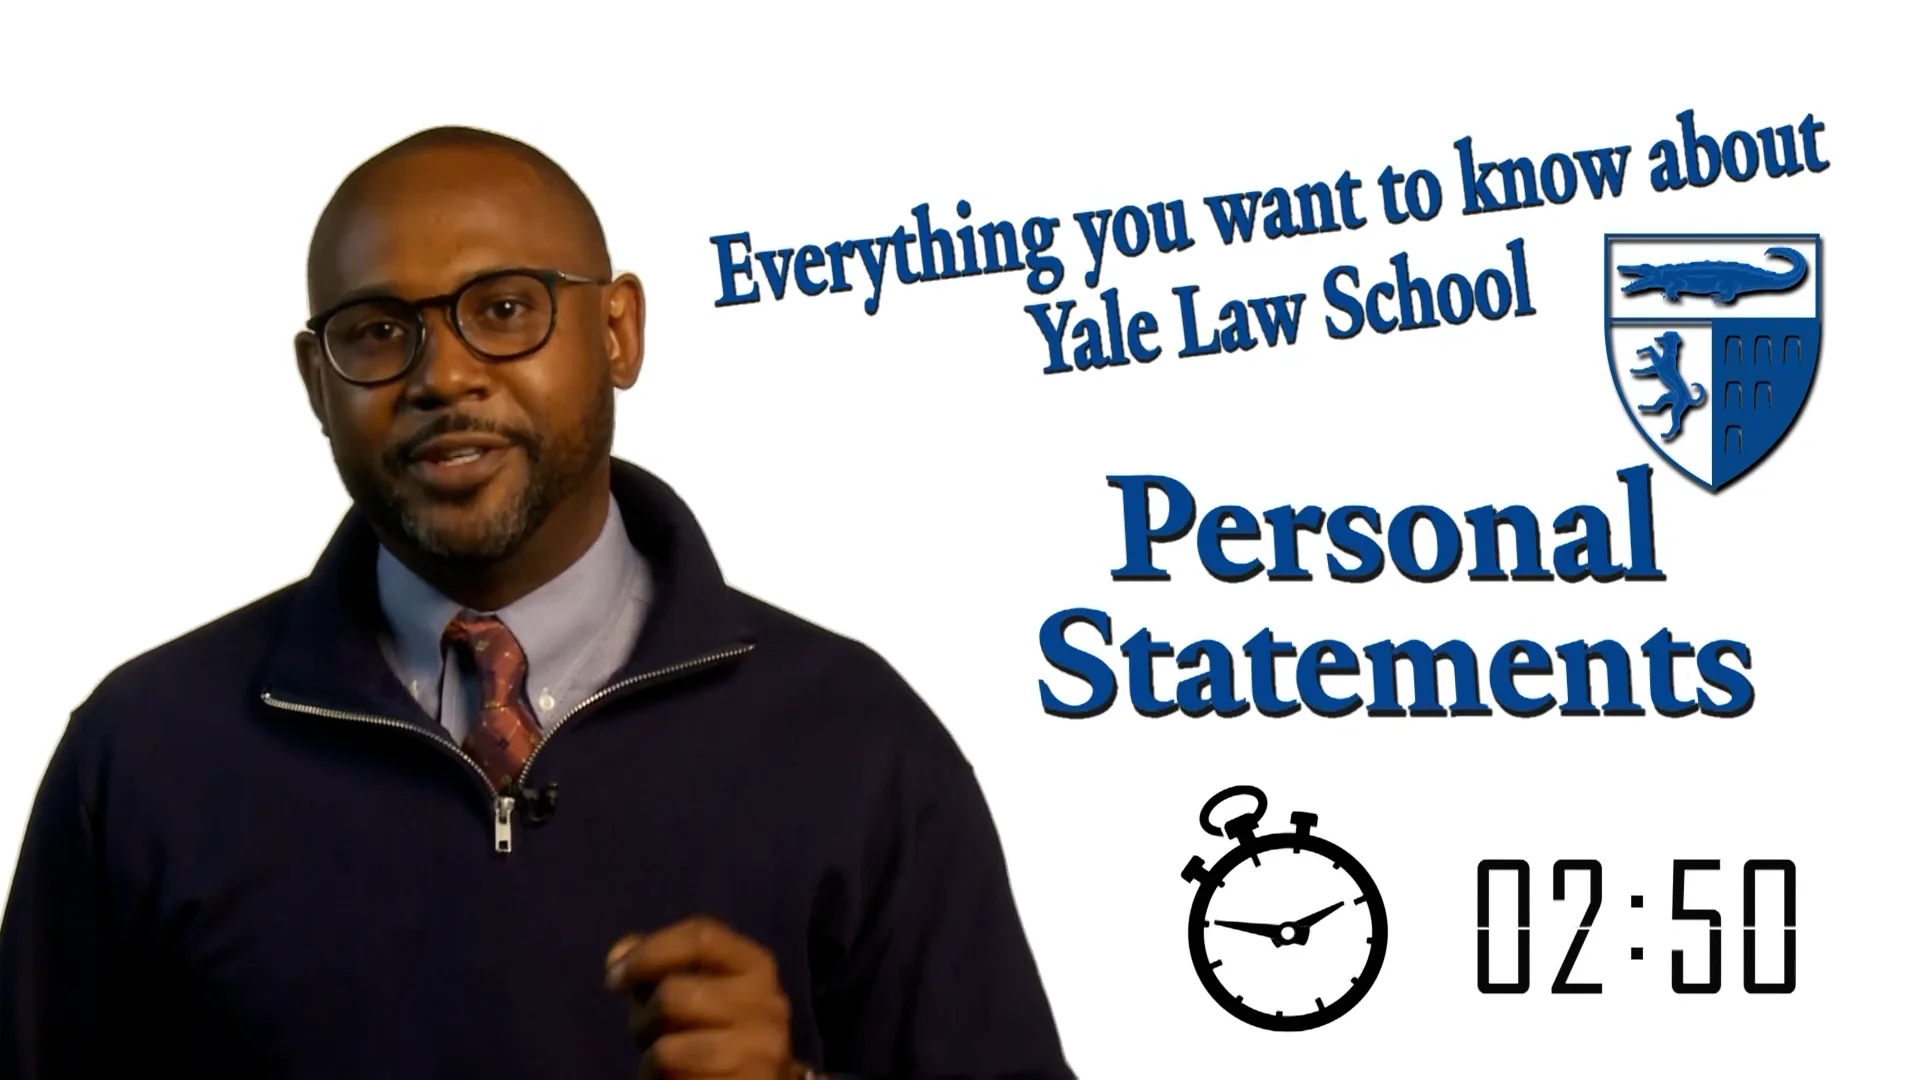 yale law school logo